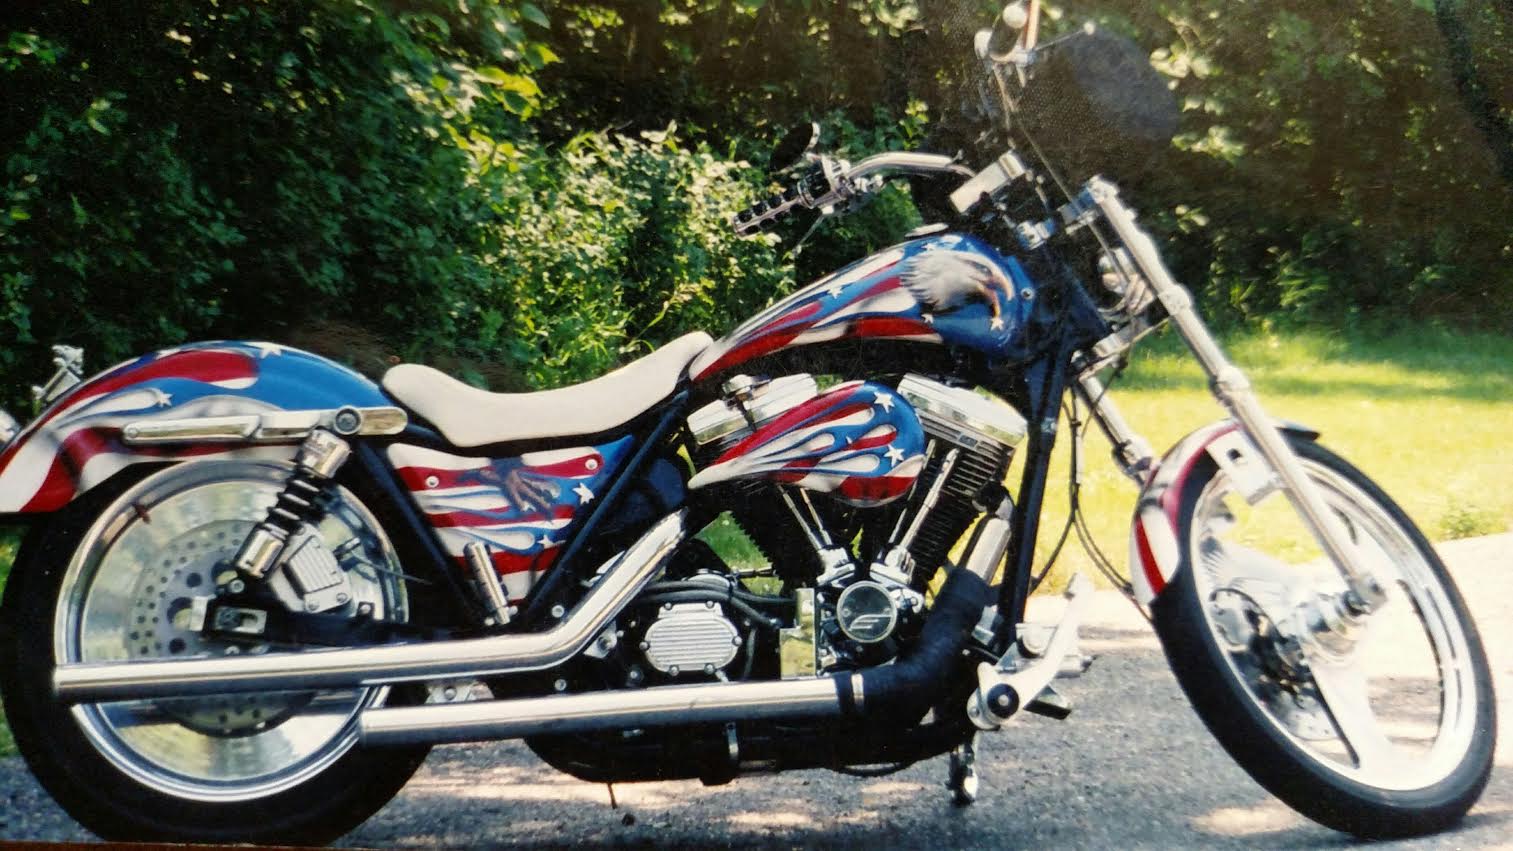 Stolen 1990 Harley FXRS